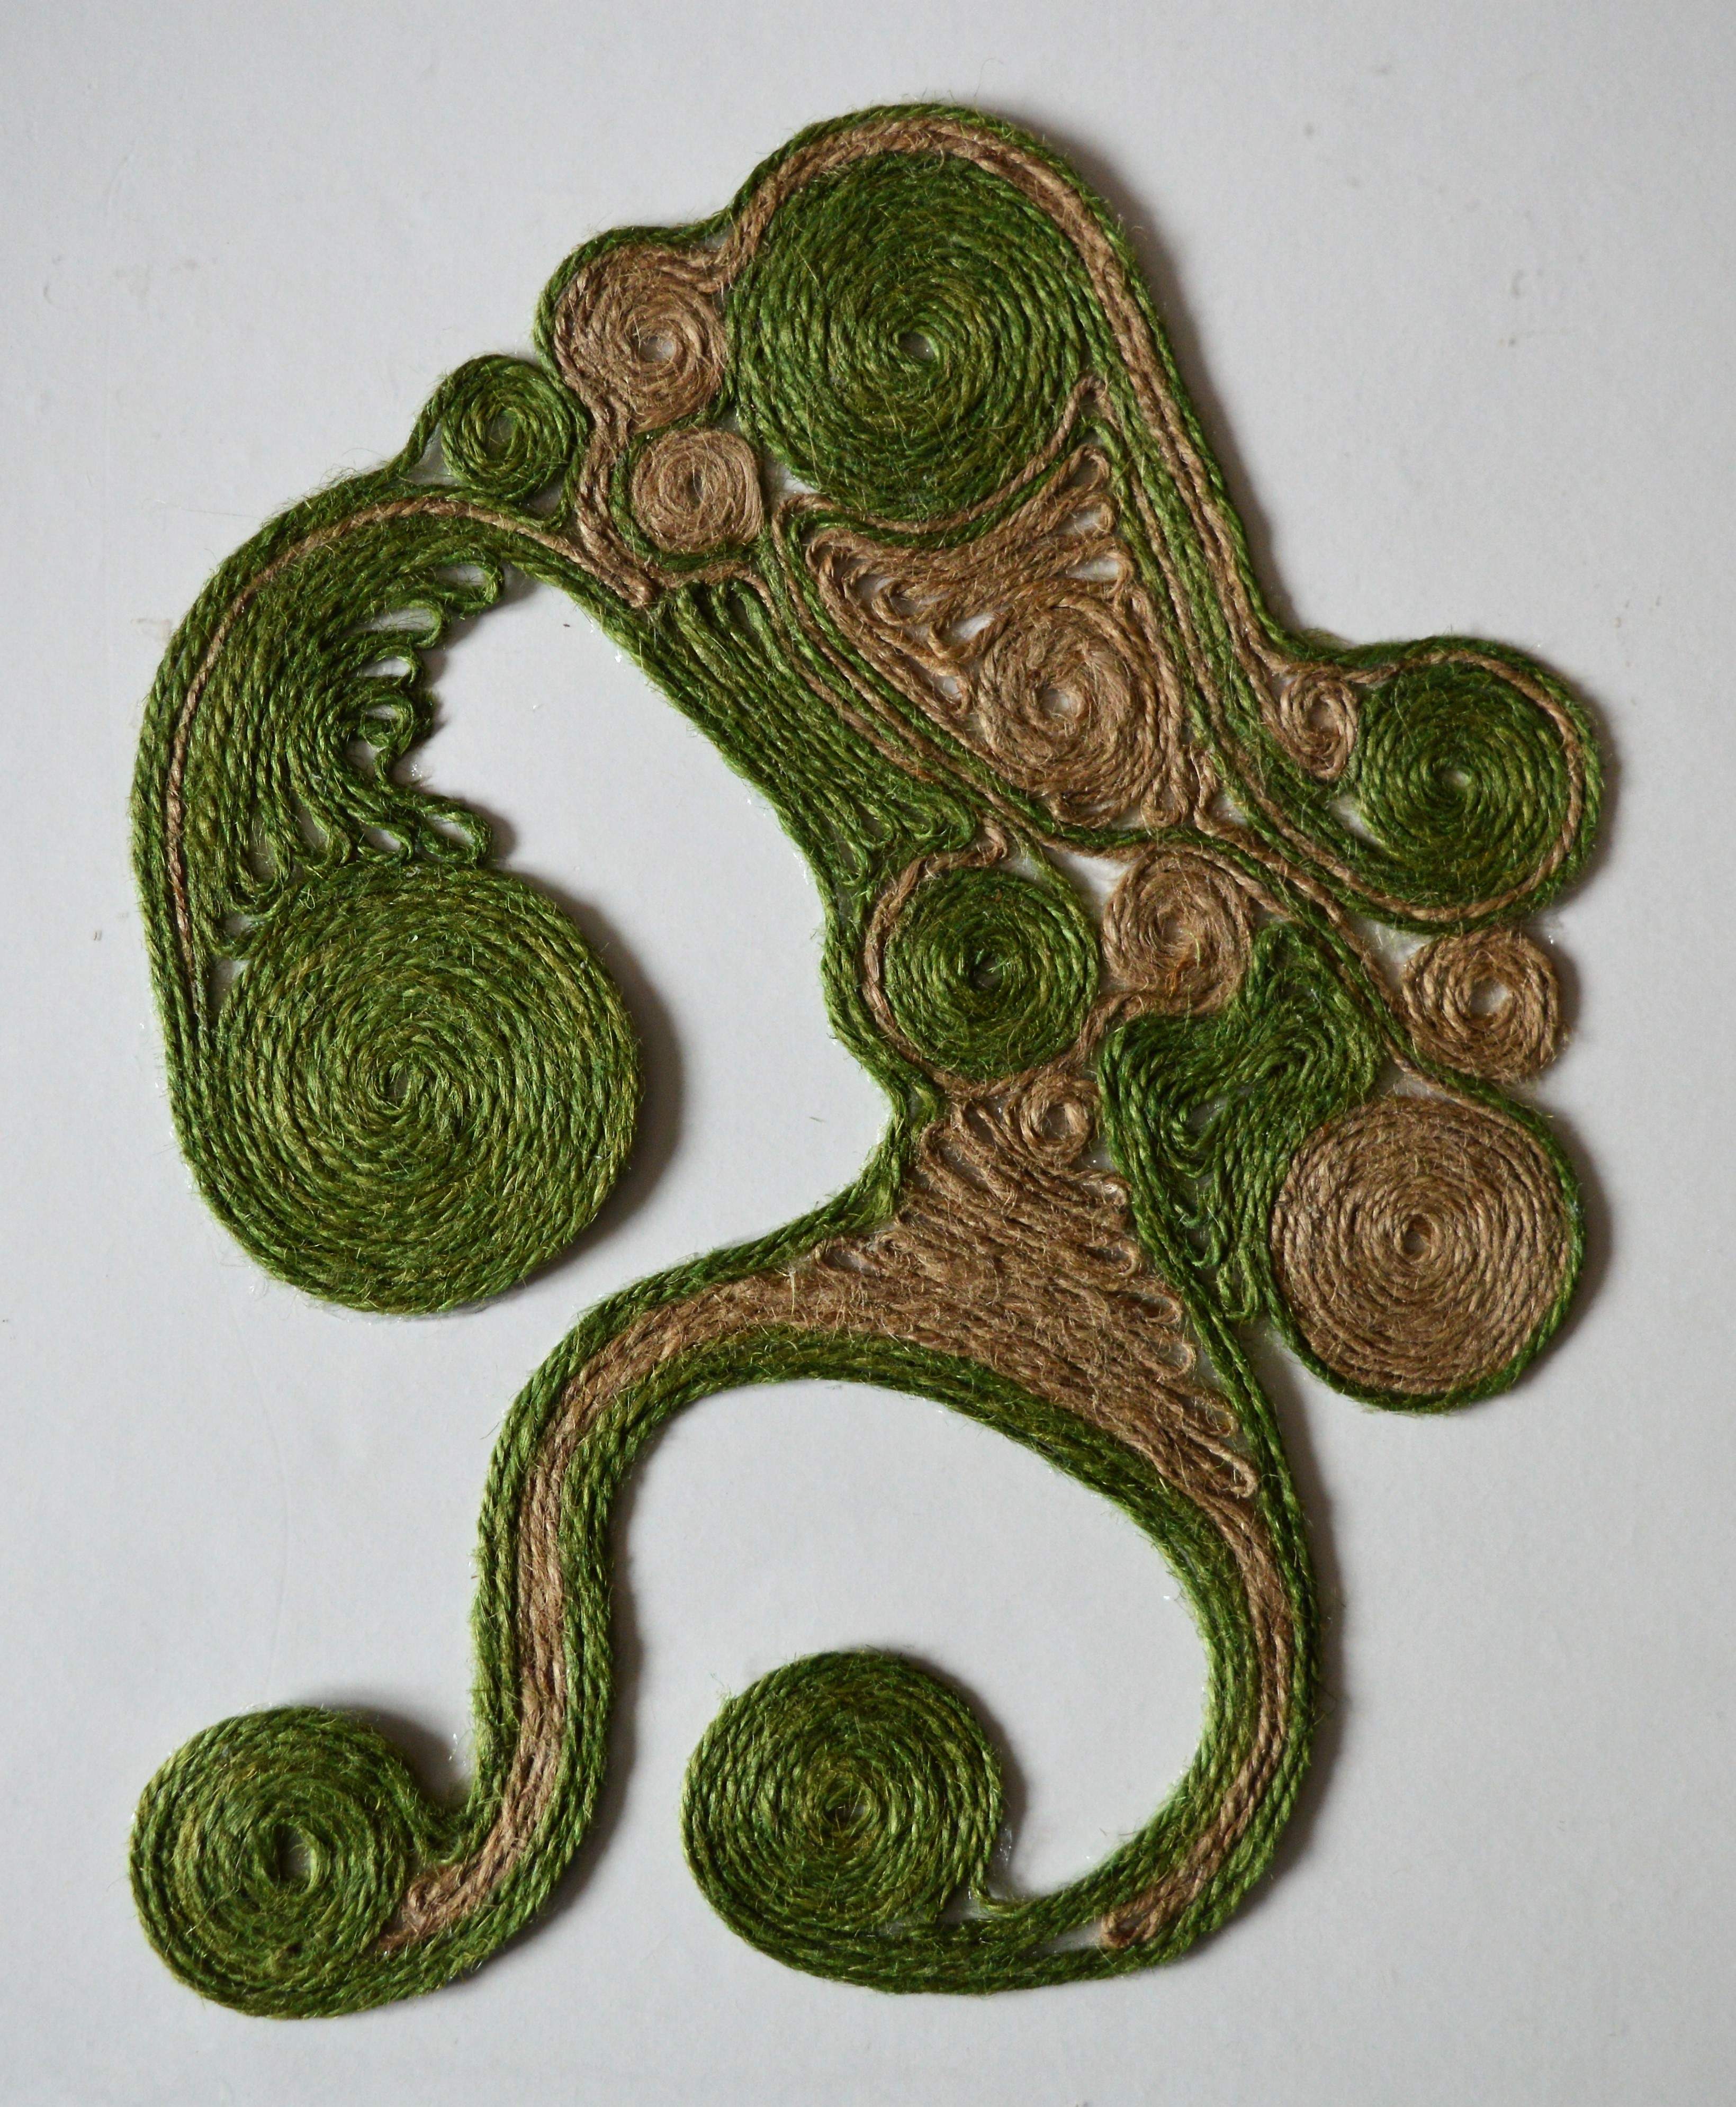 Green & brown twine, glue. Approx 23cm x 30cm.